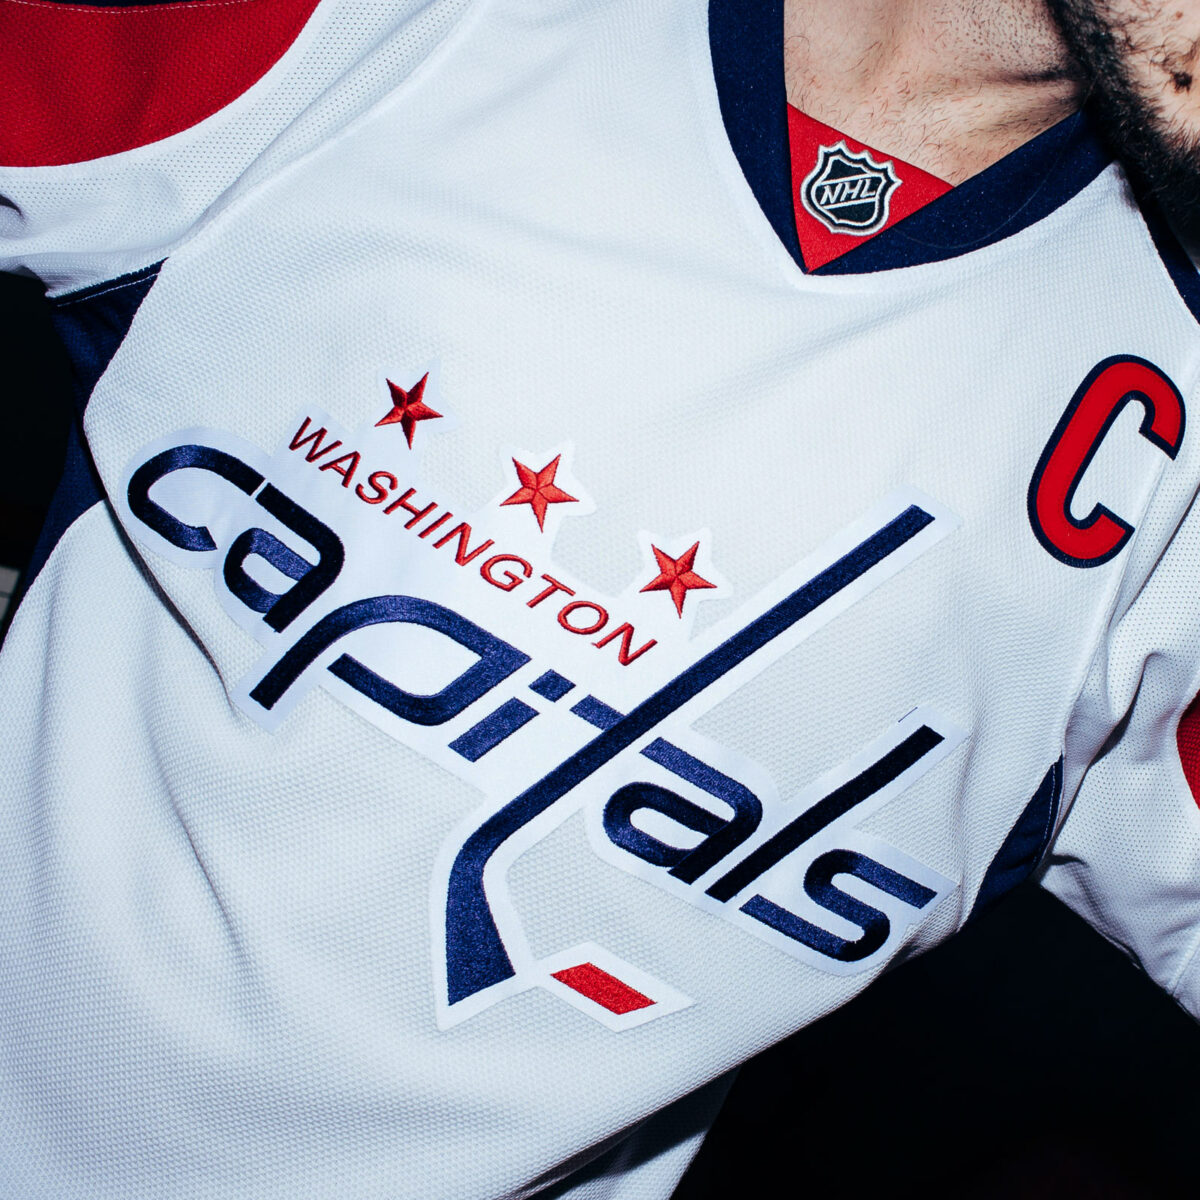 NHL Reebok Washington Capitals 8 Ovechkin Jersey kaufen